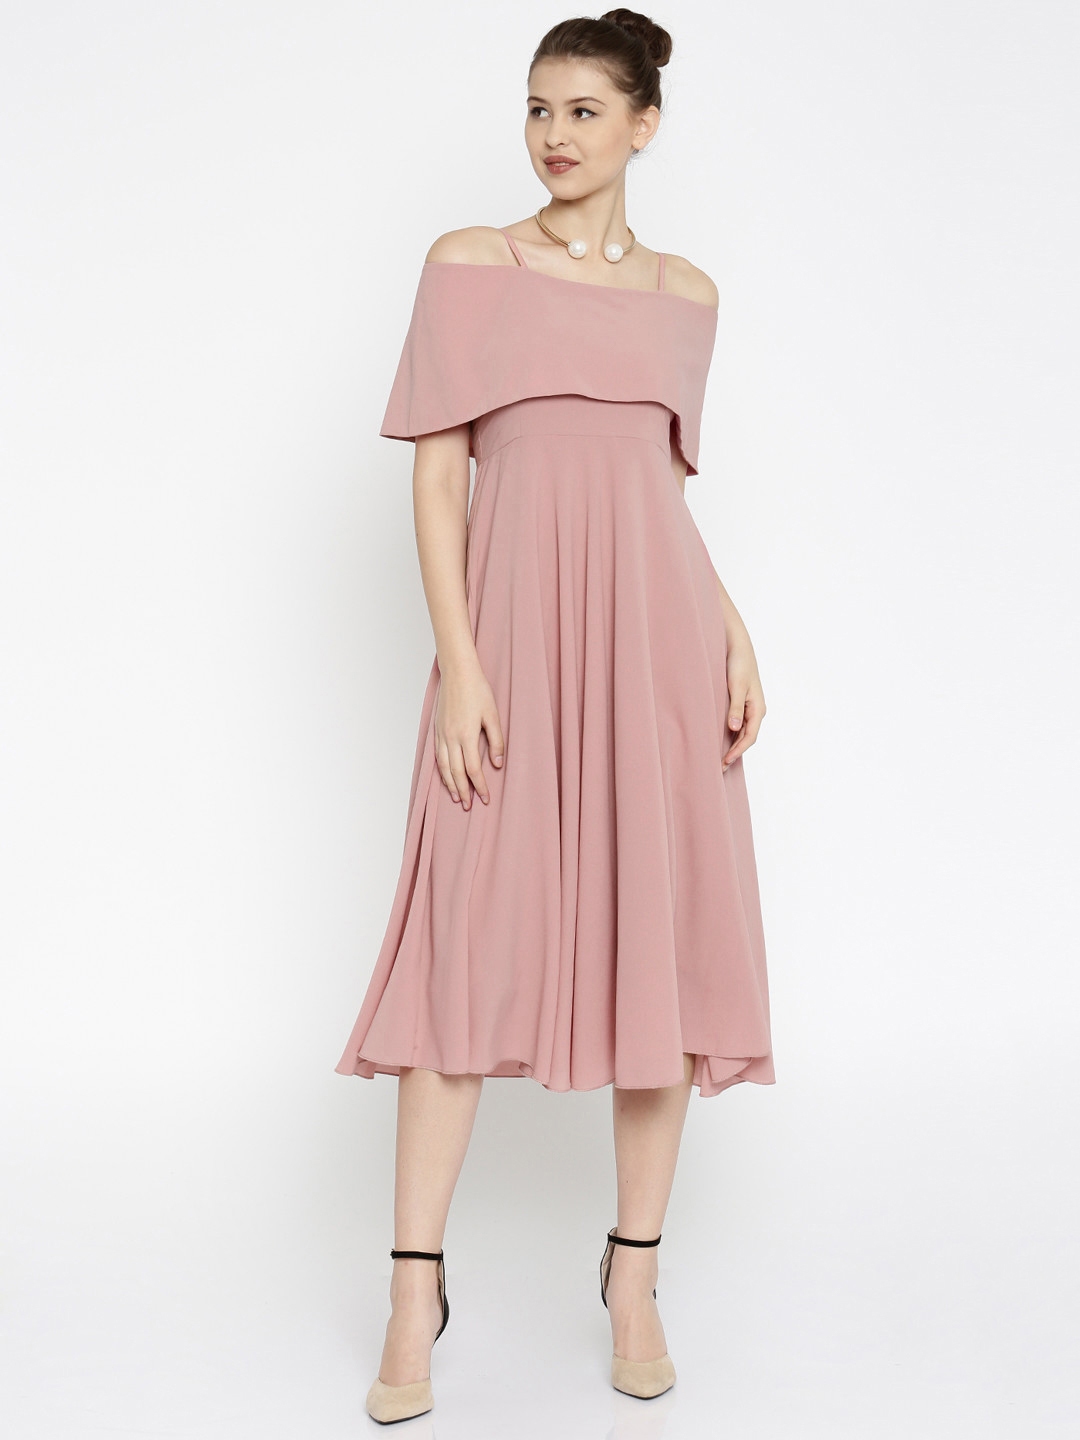 buy dresses online myntra